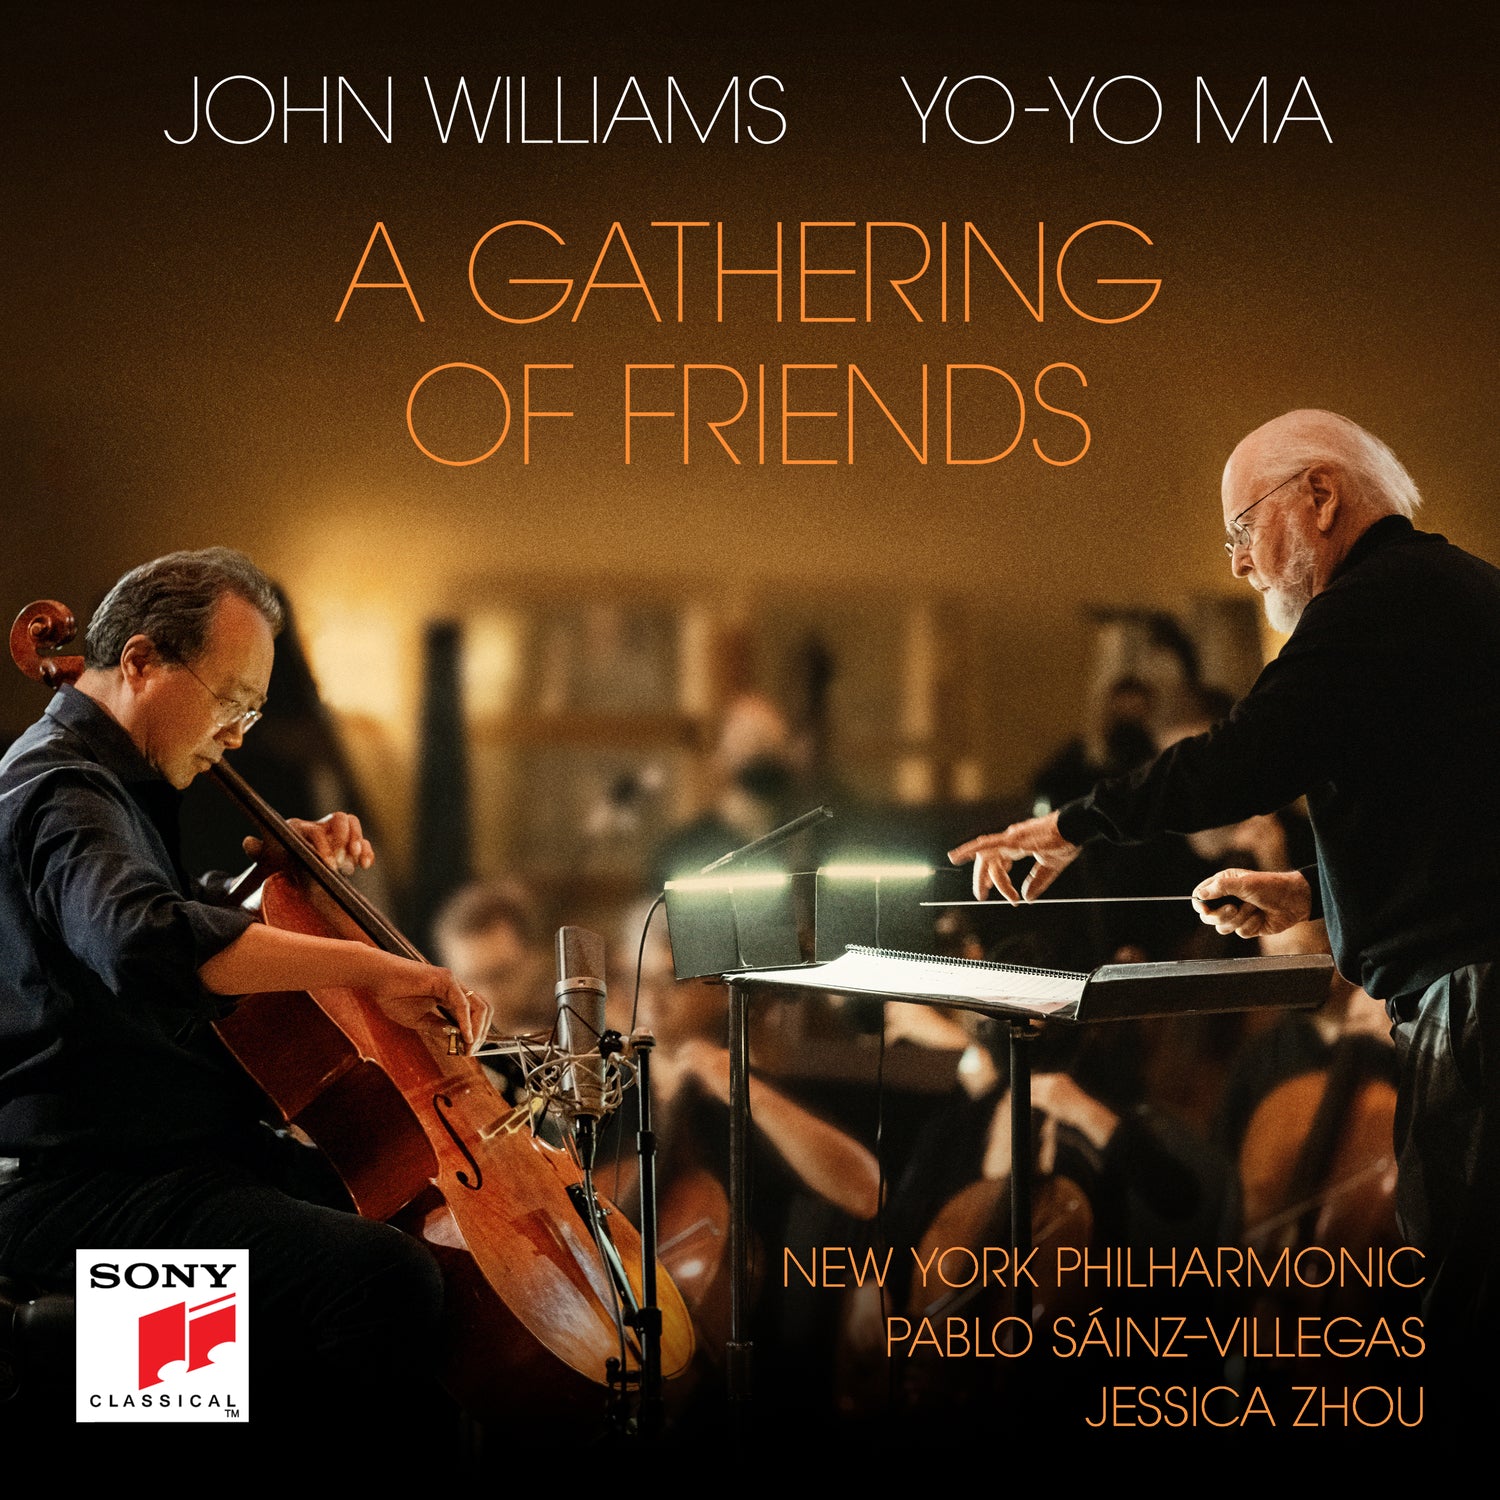 A Gathering Of Friends / Yo-Yo Ma, Williams, New York Philharmonic